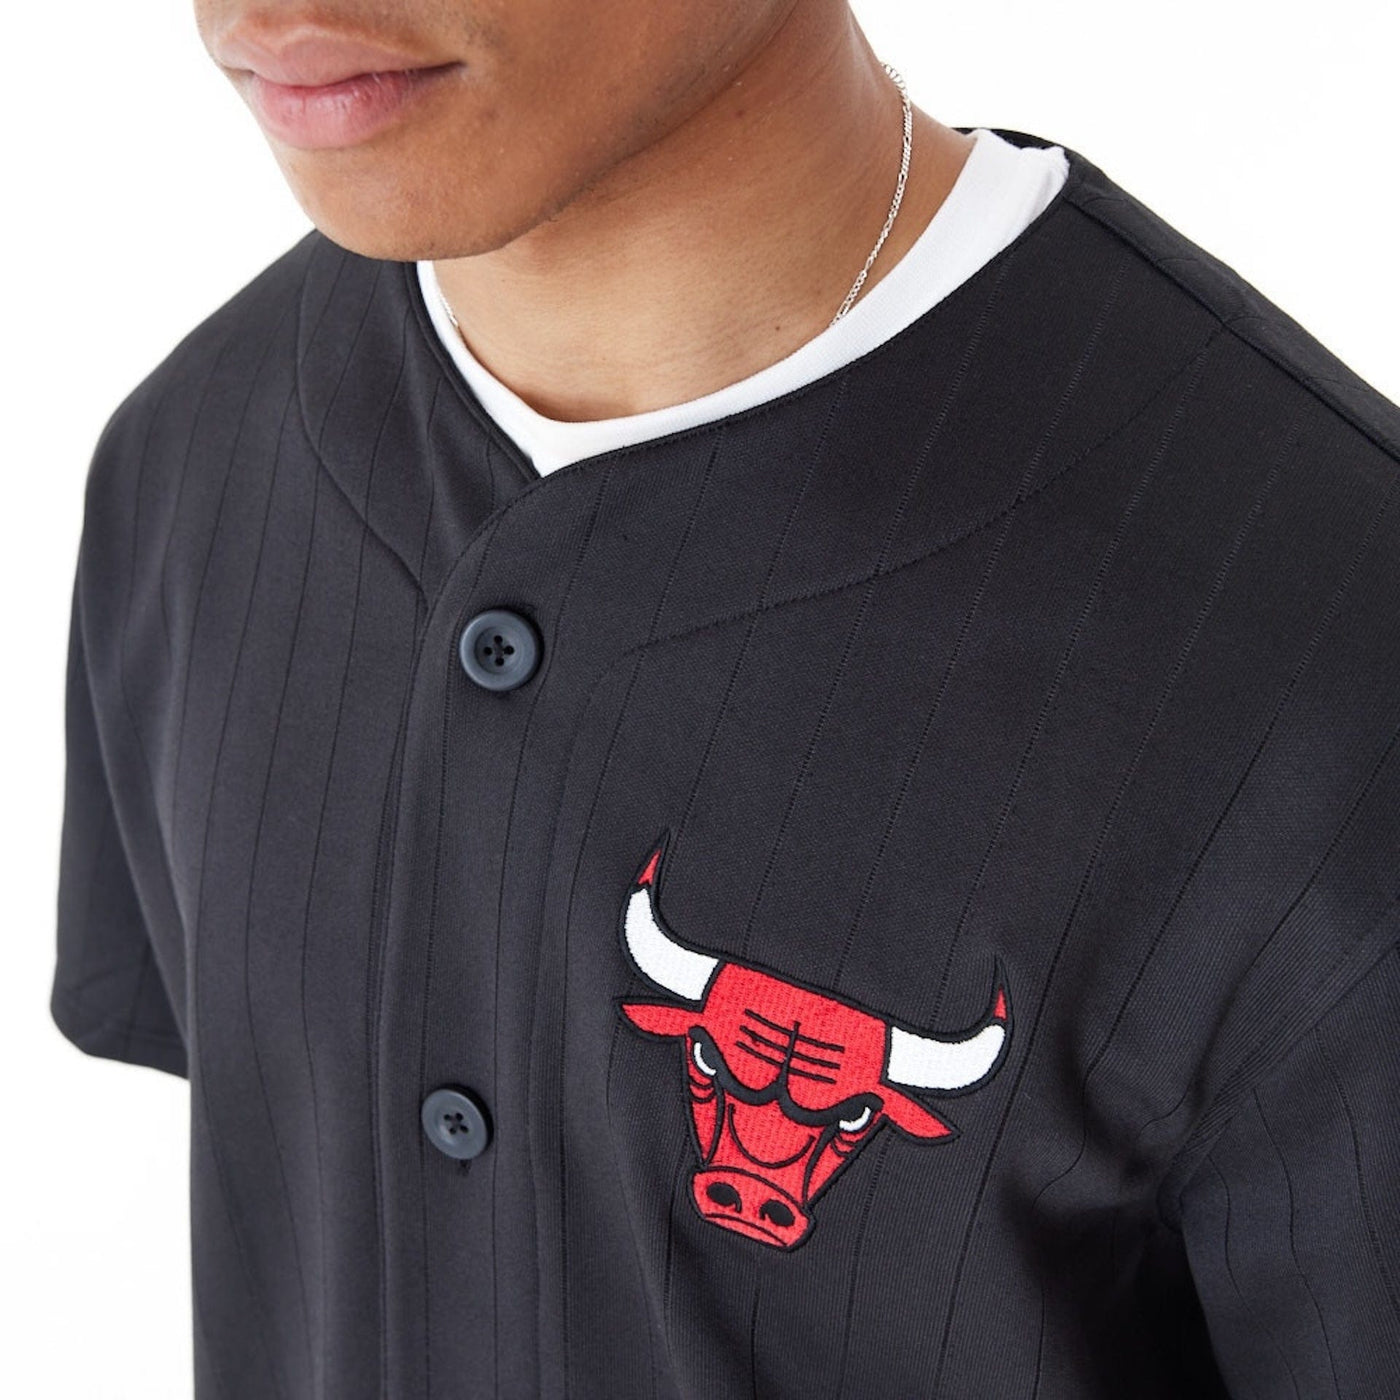 NBA Team Logo Jersey Chicago Bulls Black/Red